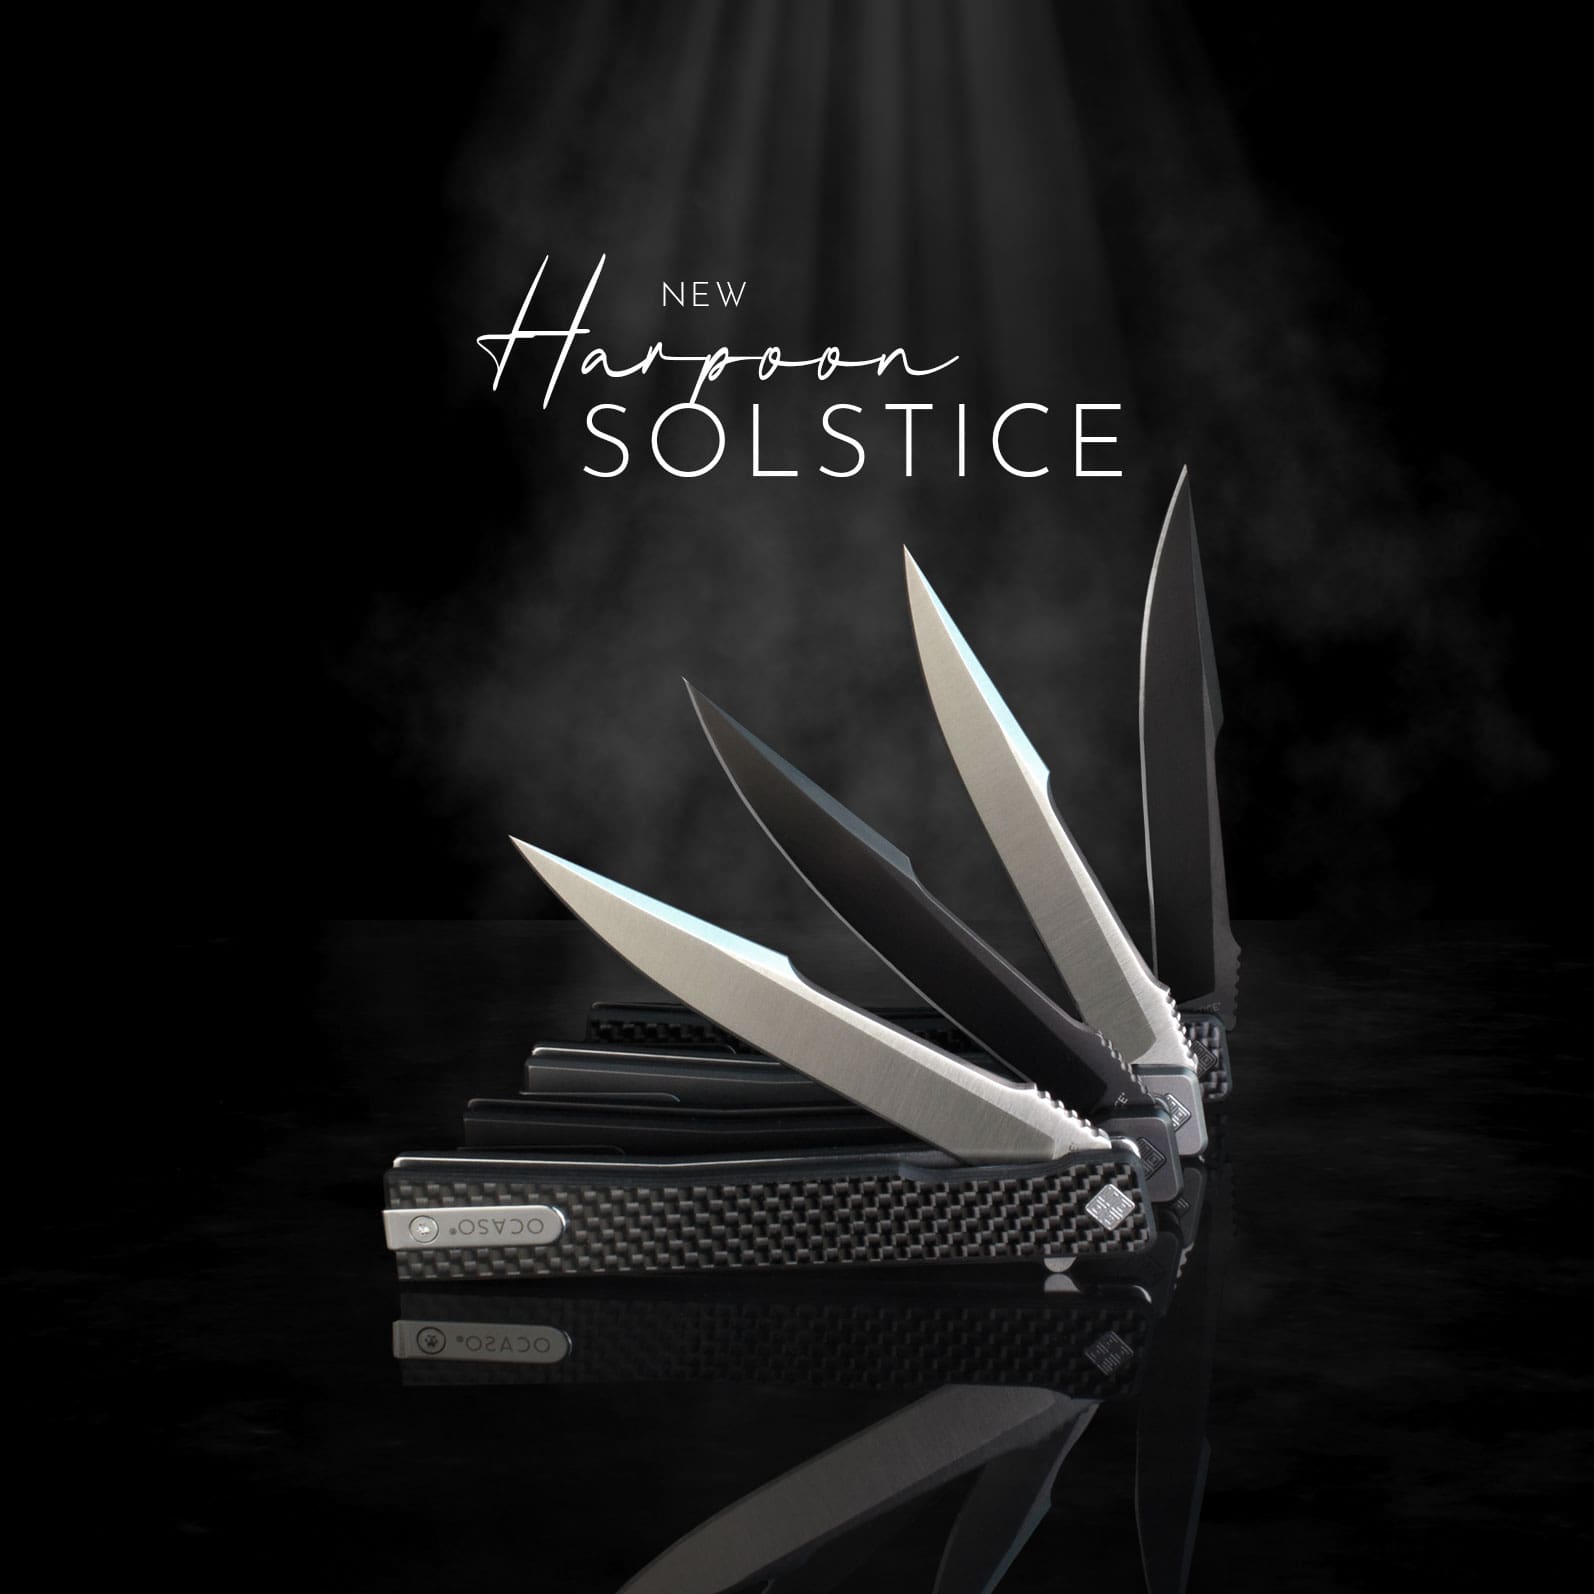 Ocaso Harpoon Solstice designed by Andrew Demko